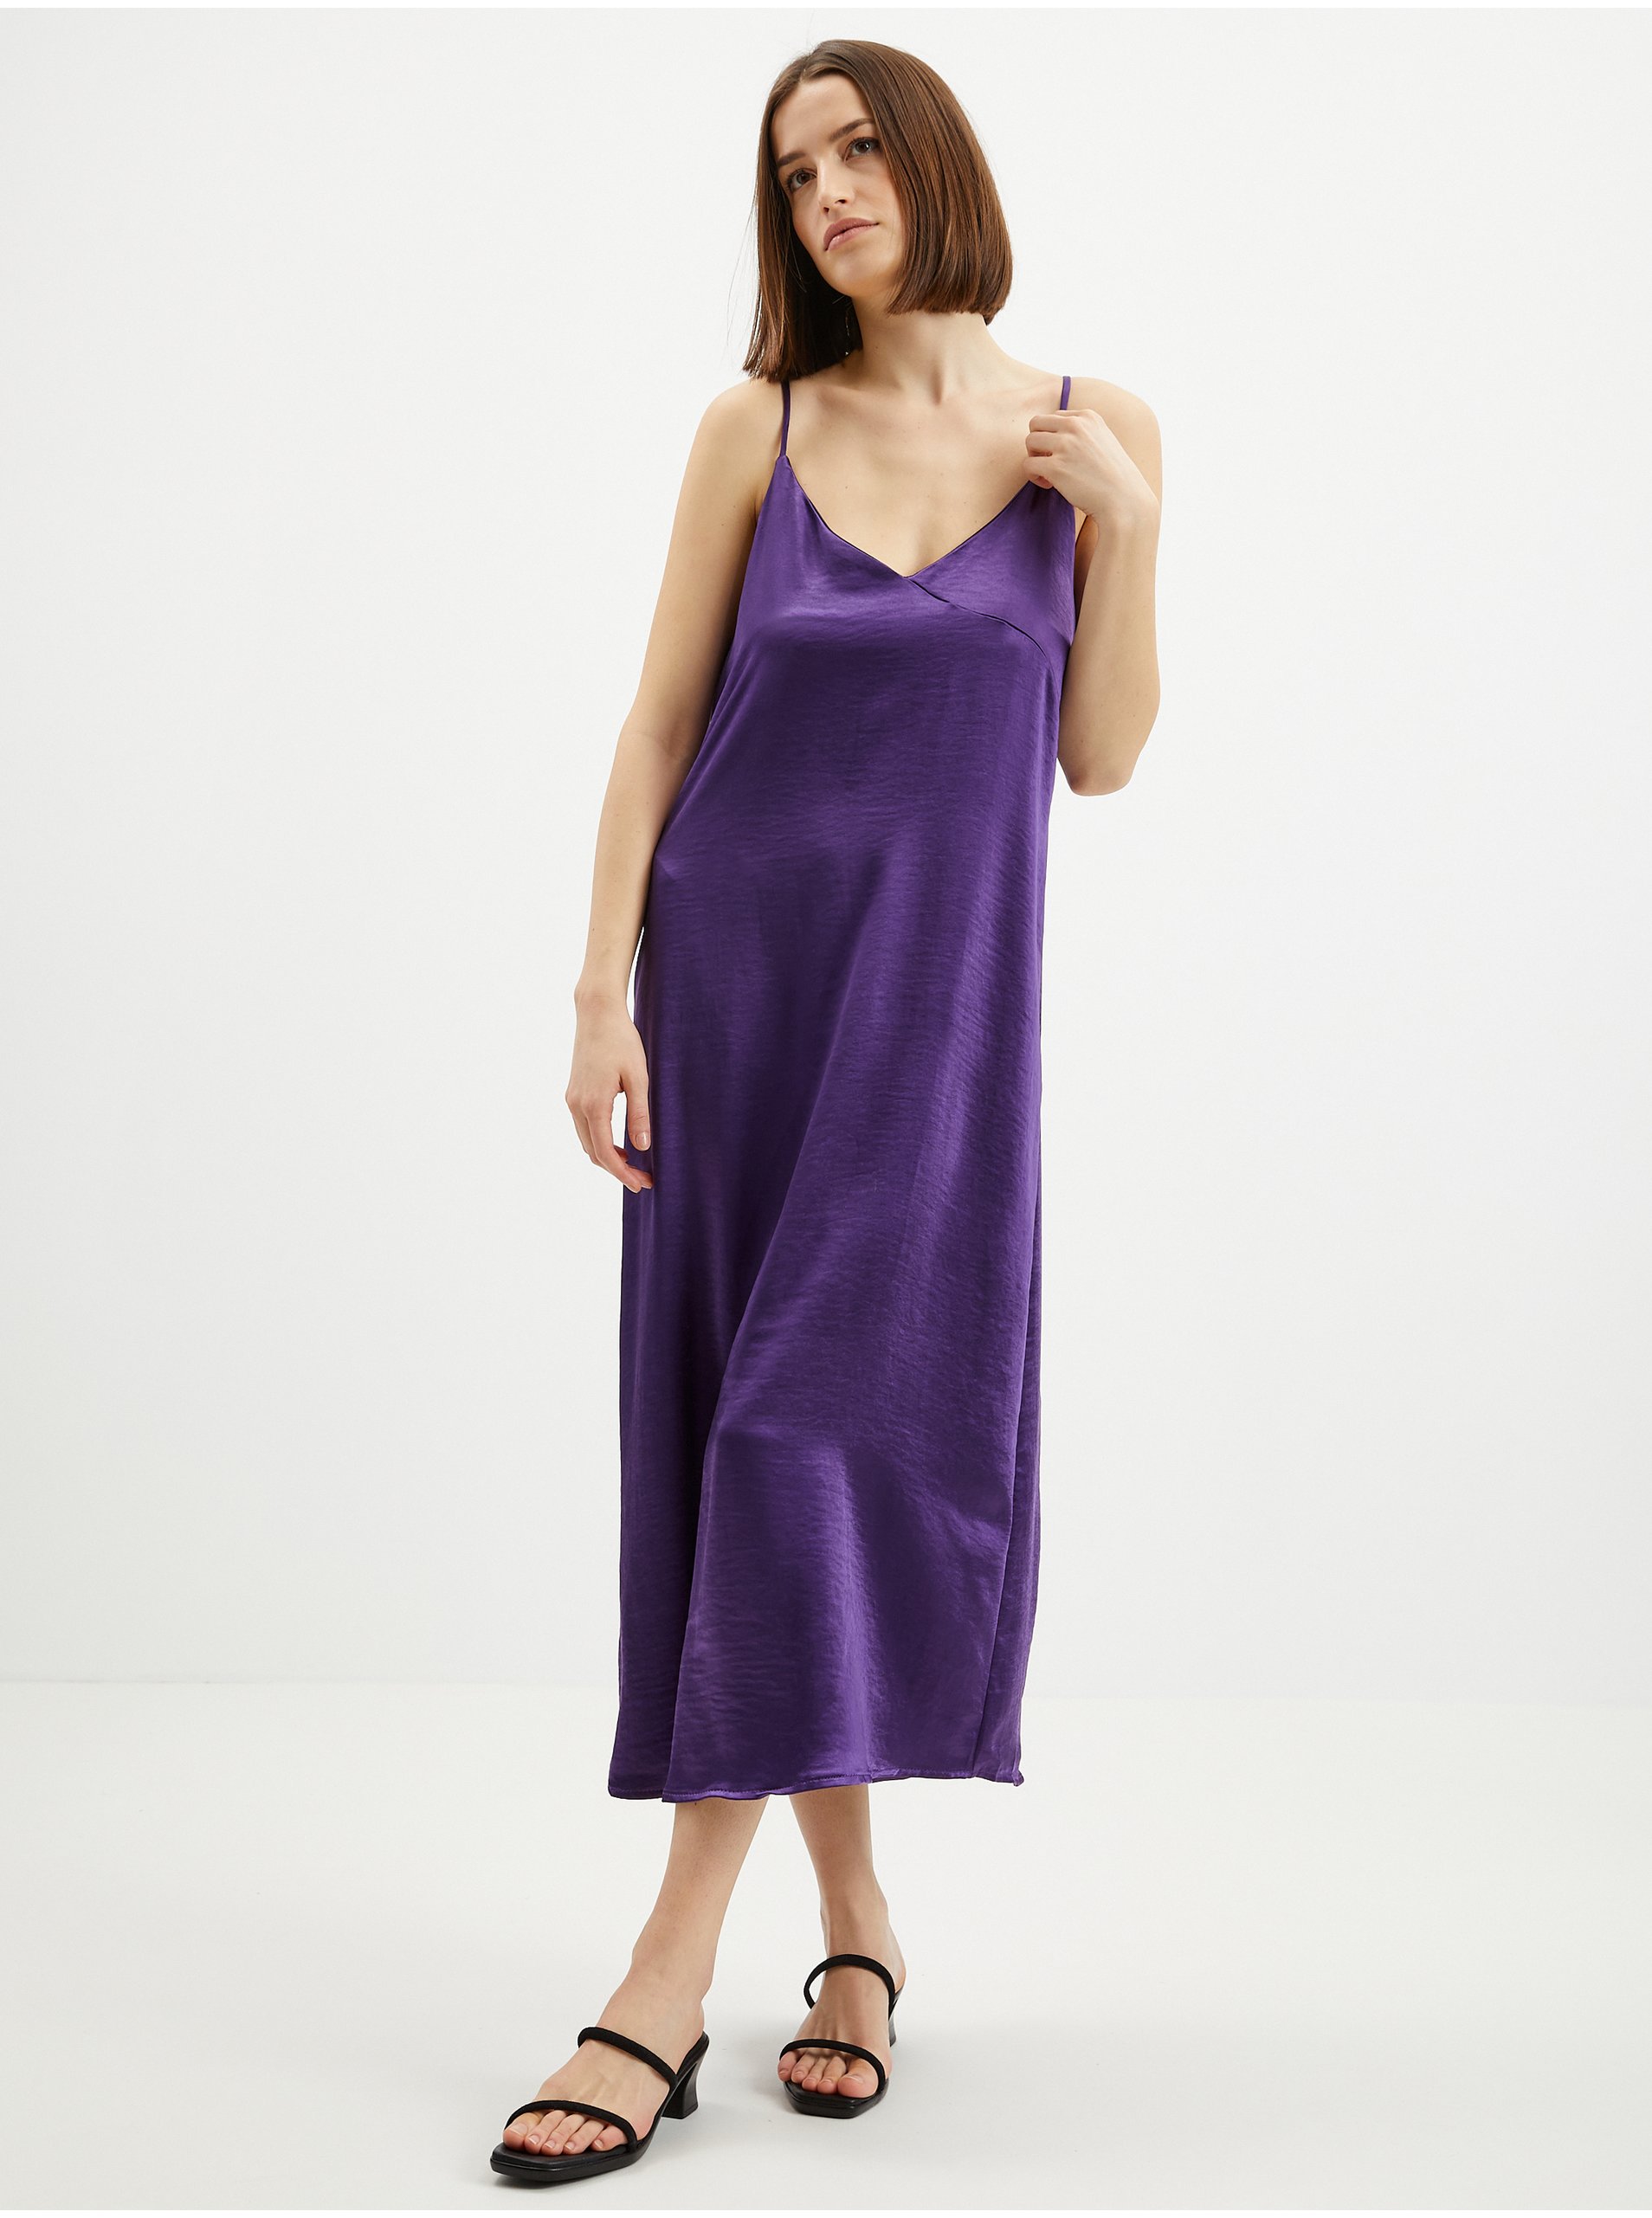 Lacno Letné a plážové šaty pre ženy ONLY - fialová